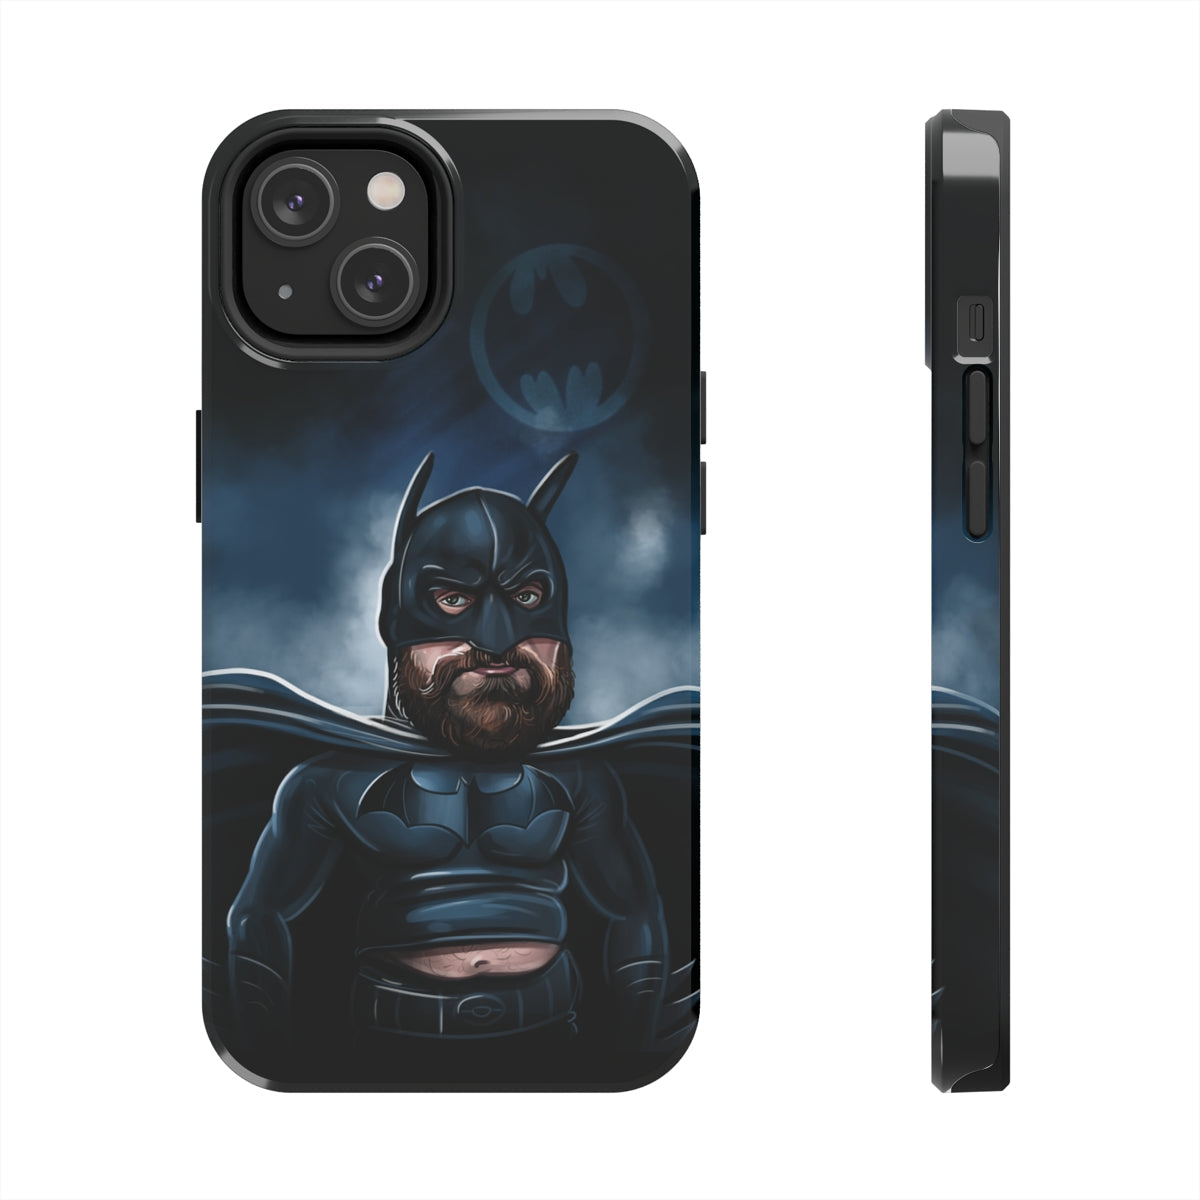 Tyson Fury tough iPhone 14 Case - Batman Edition - iPhone 14